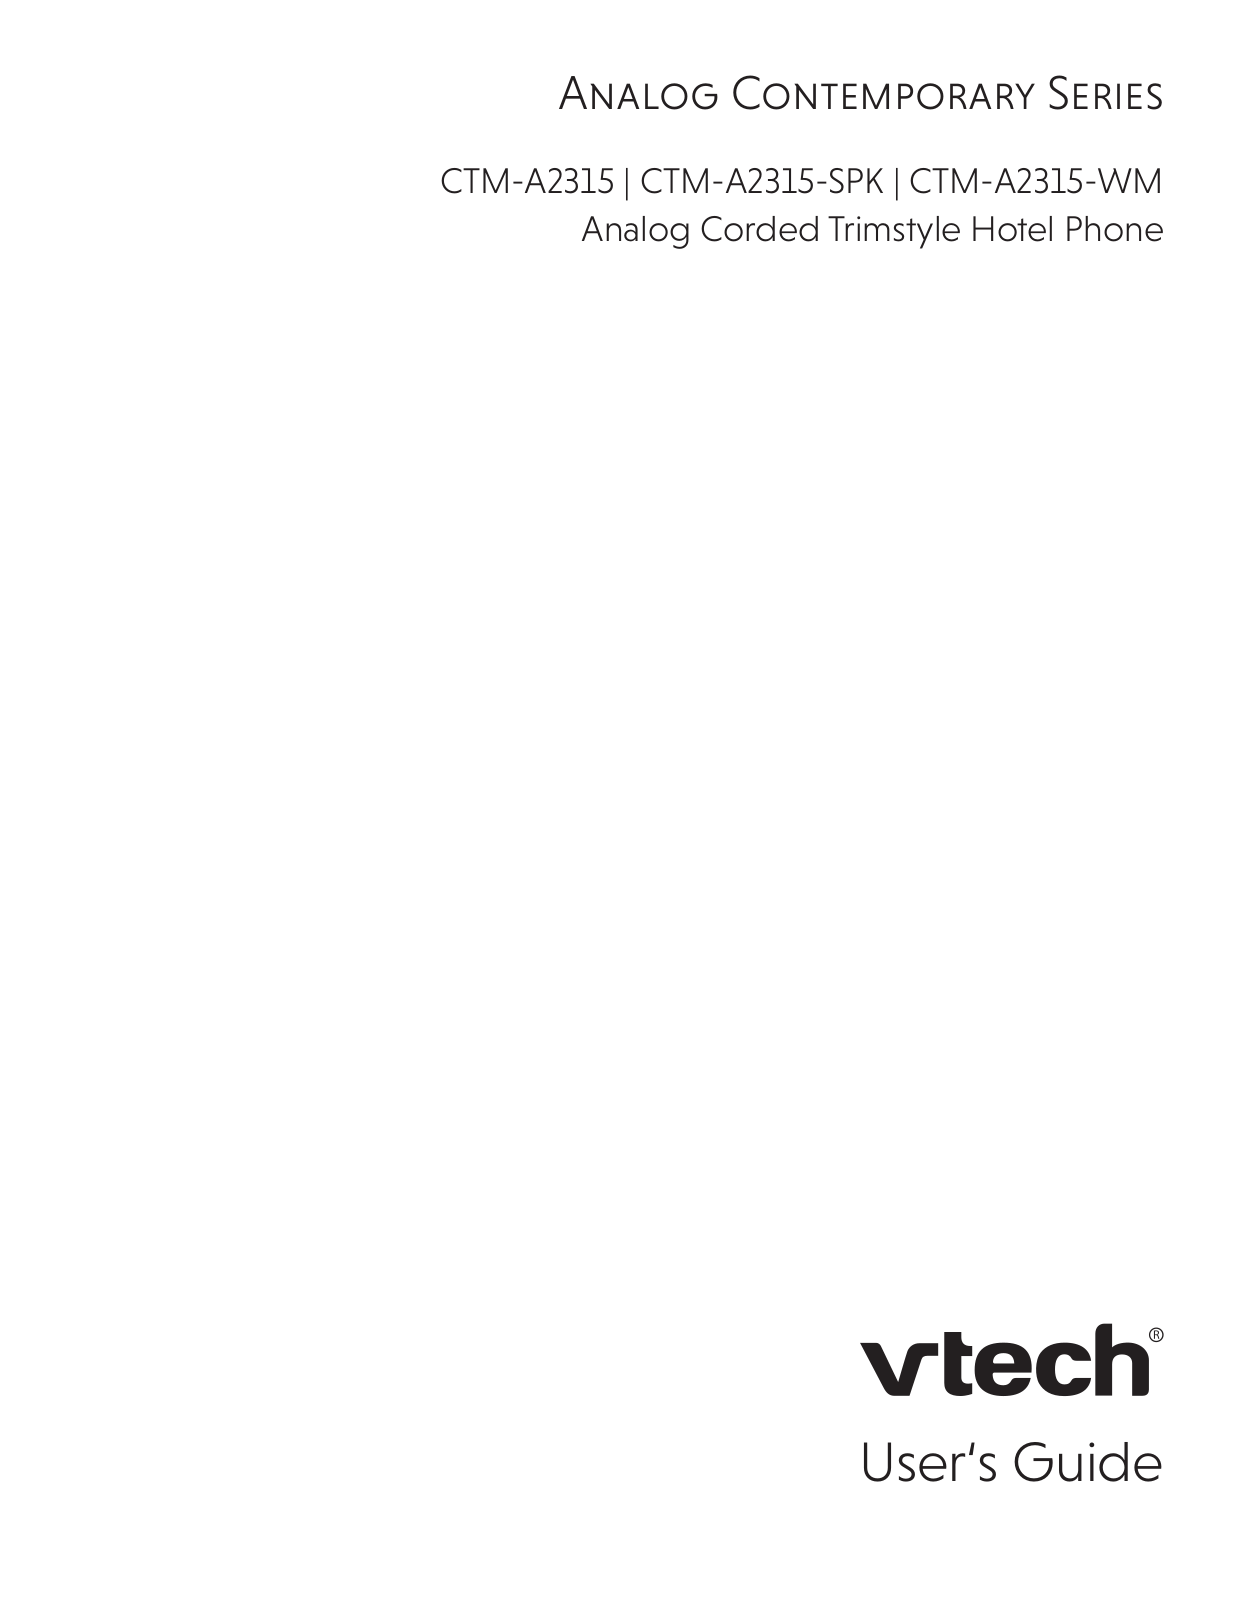 VTech CTM-A2315, CTM-A2315-SPK, CTM-A2315-WM Users manual